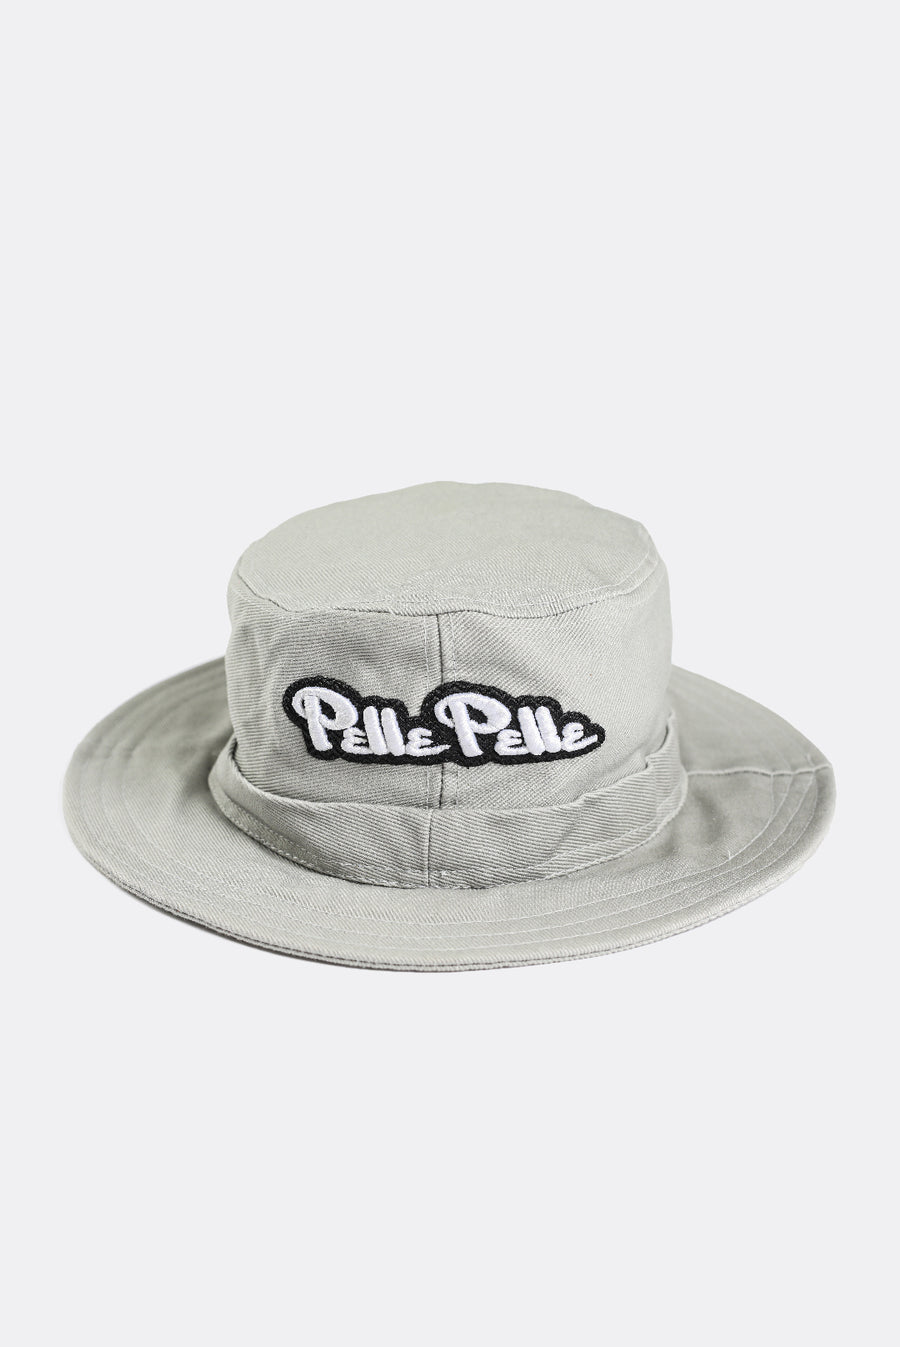 Vintage Pelle Pelle Bucket Hat